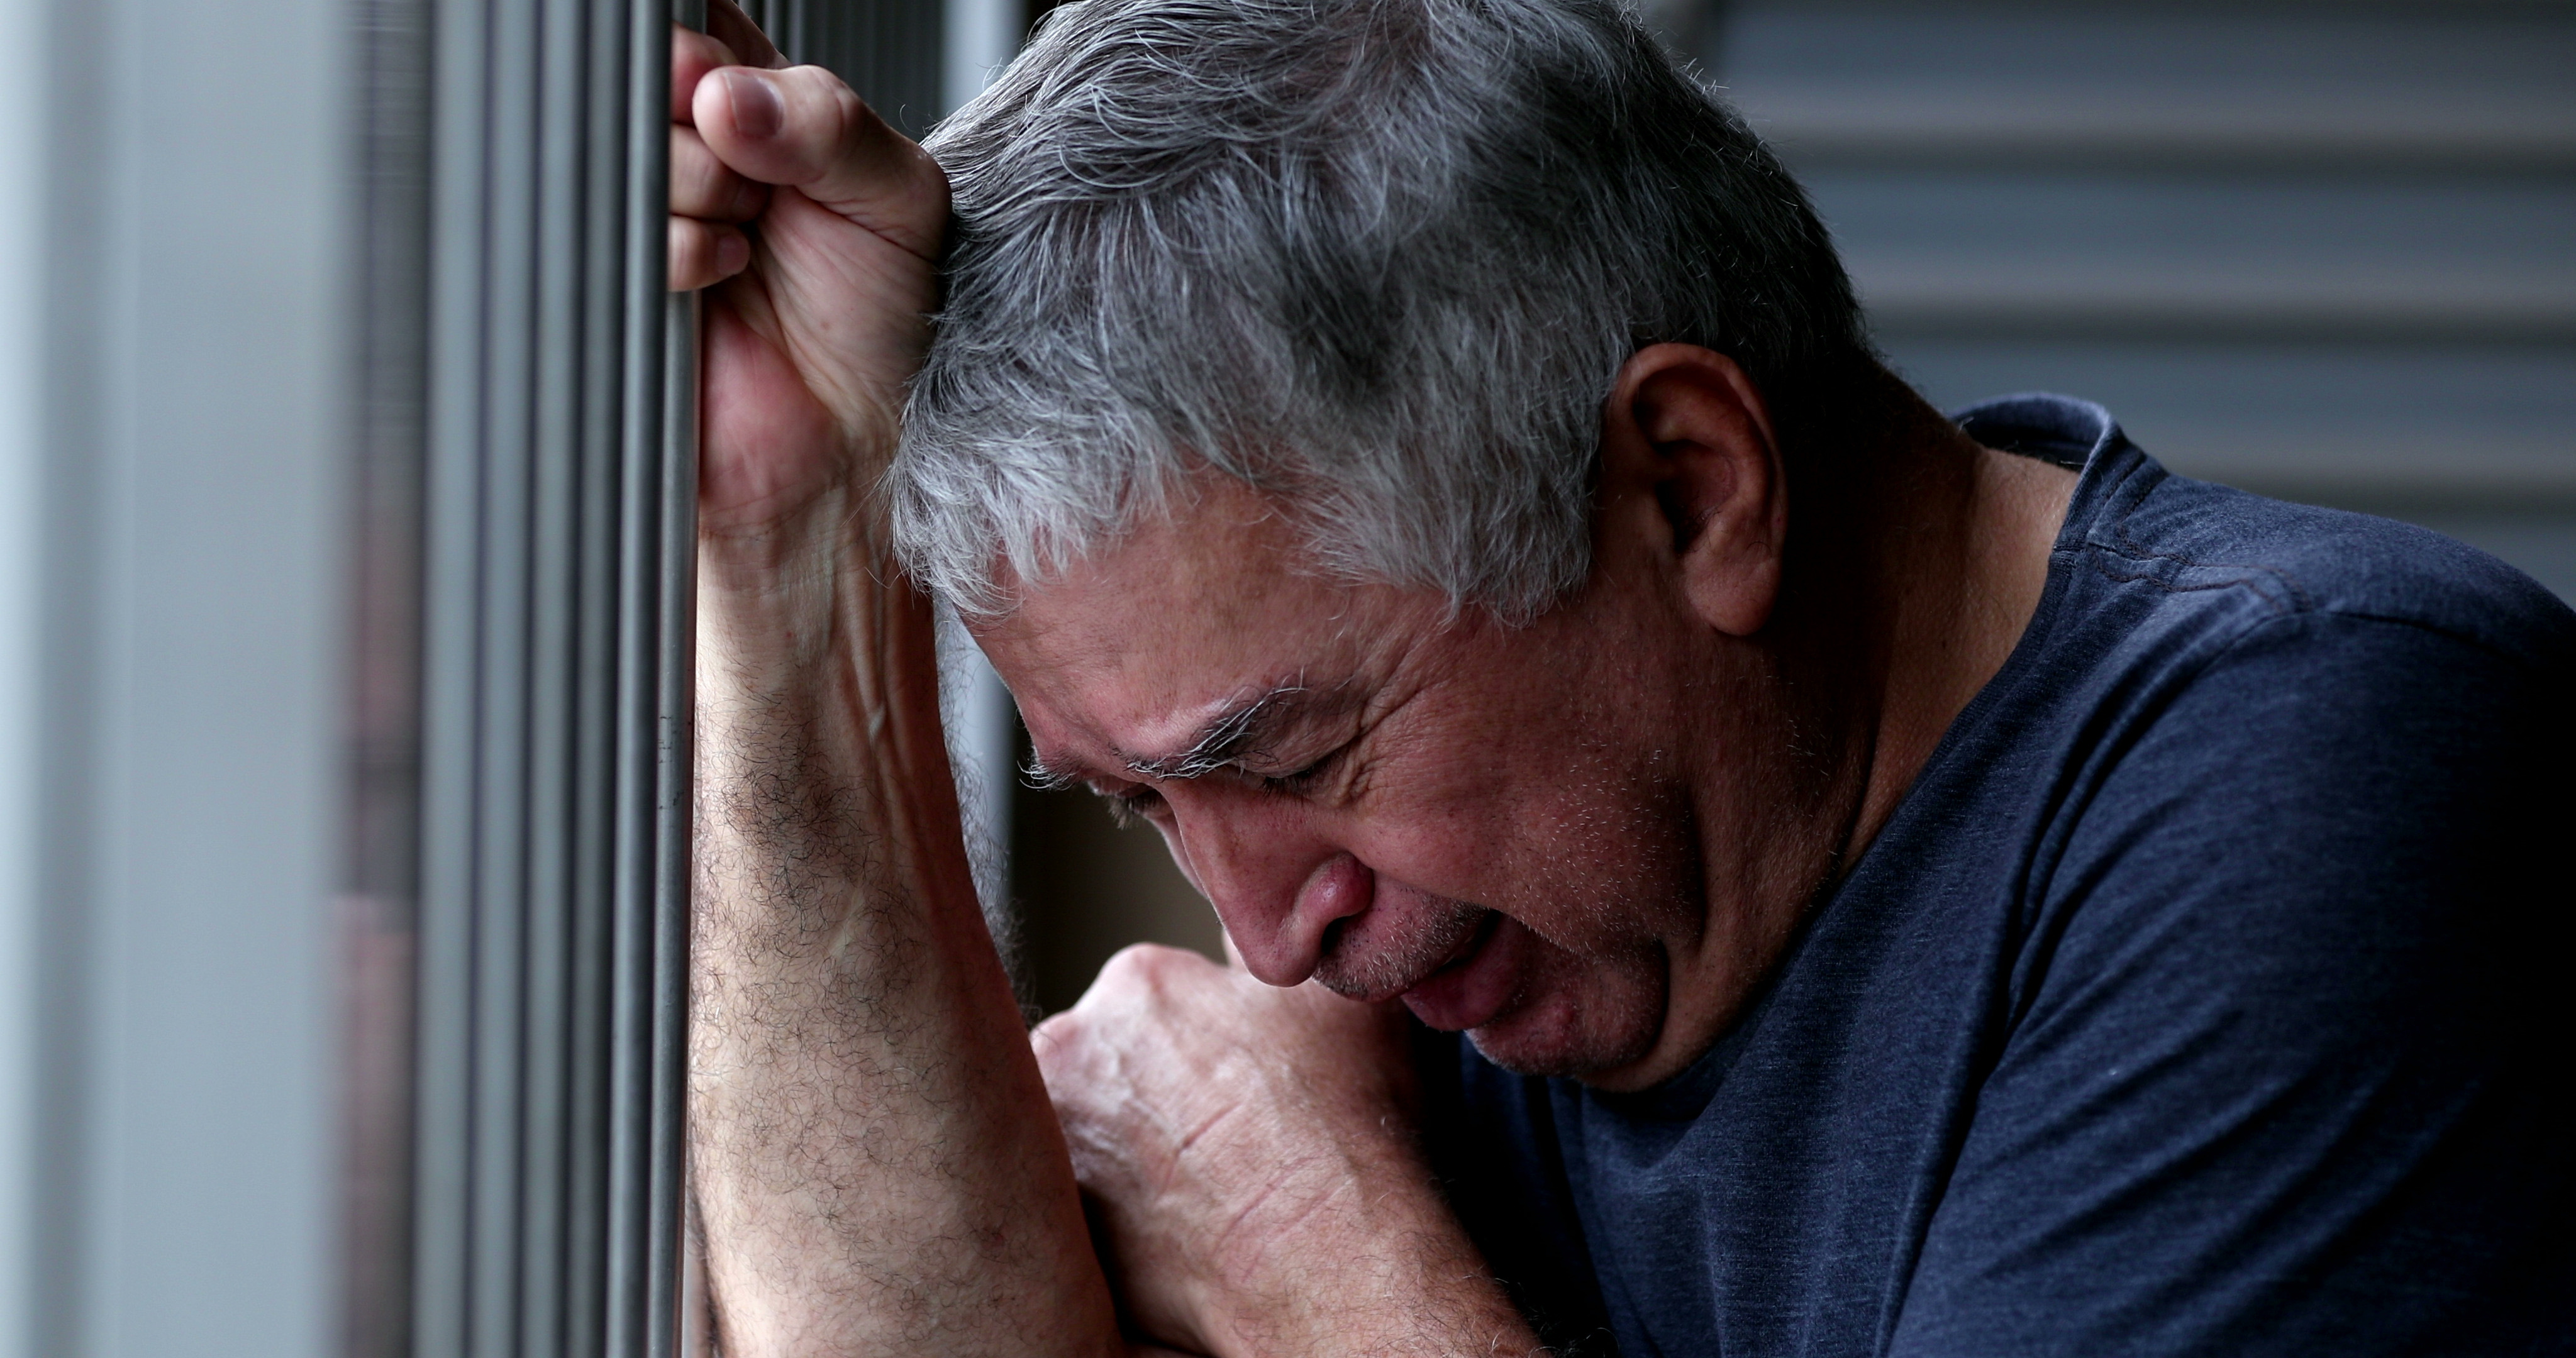 An elderly man crying. │Source: Shutterstock